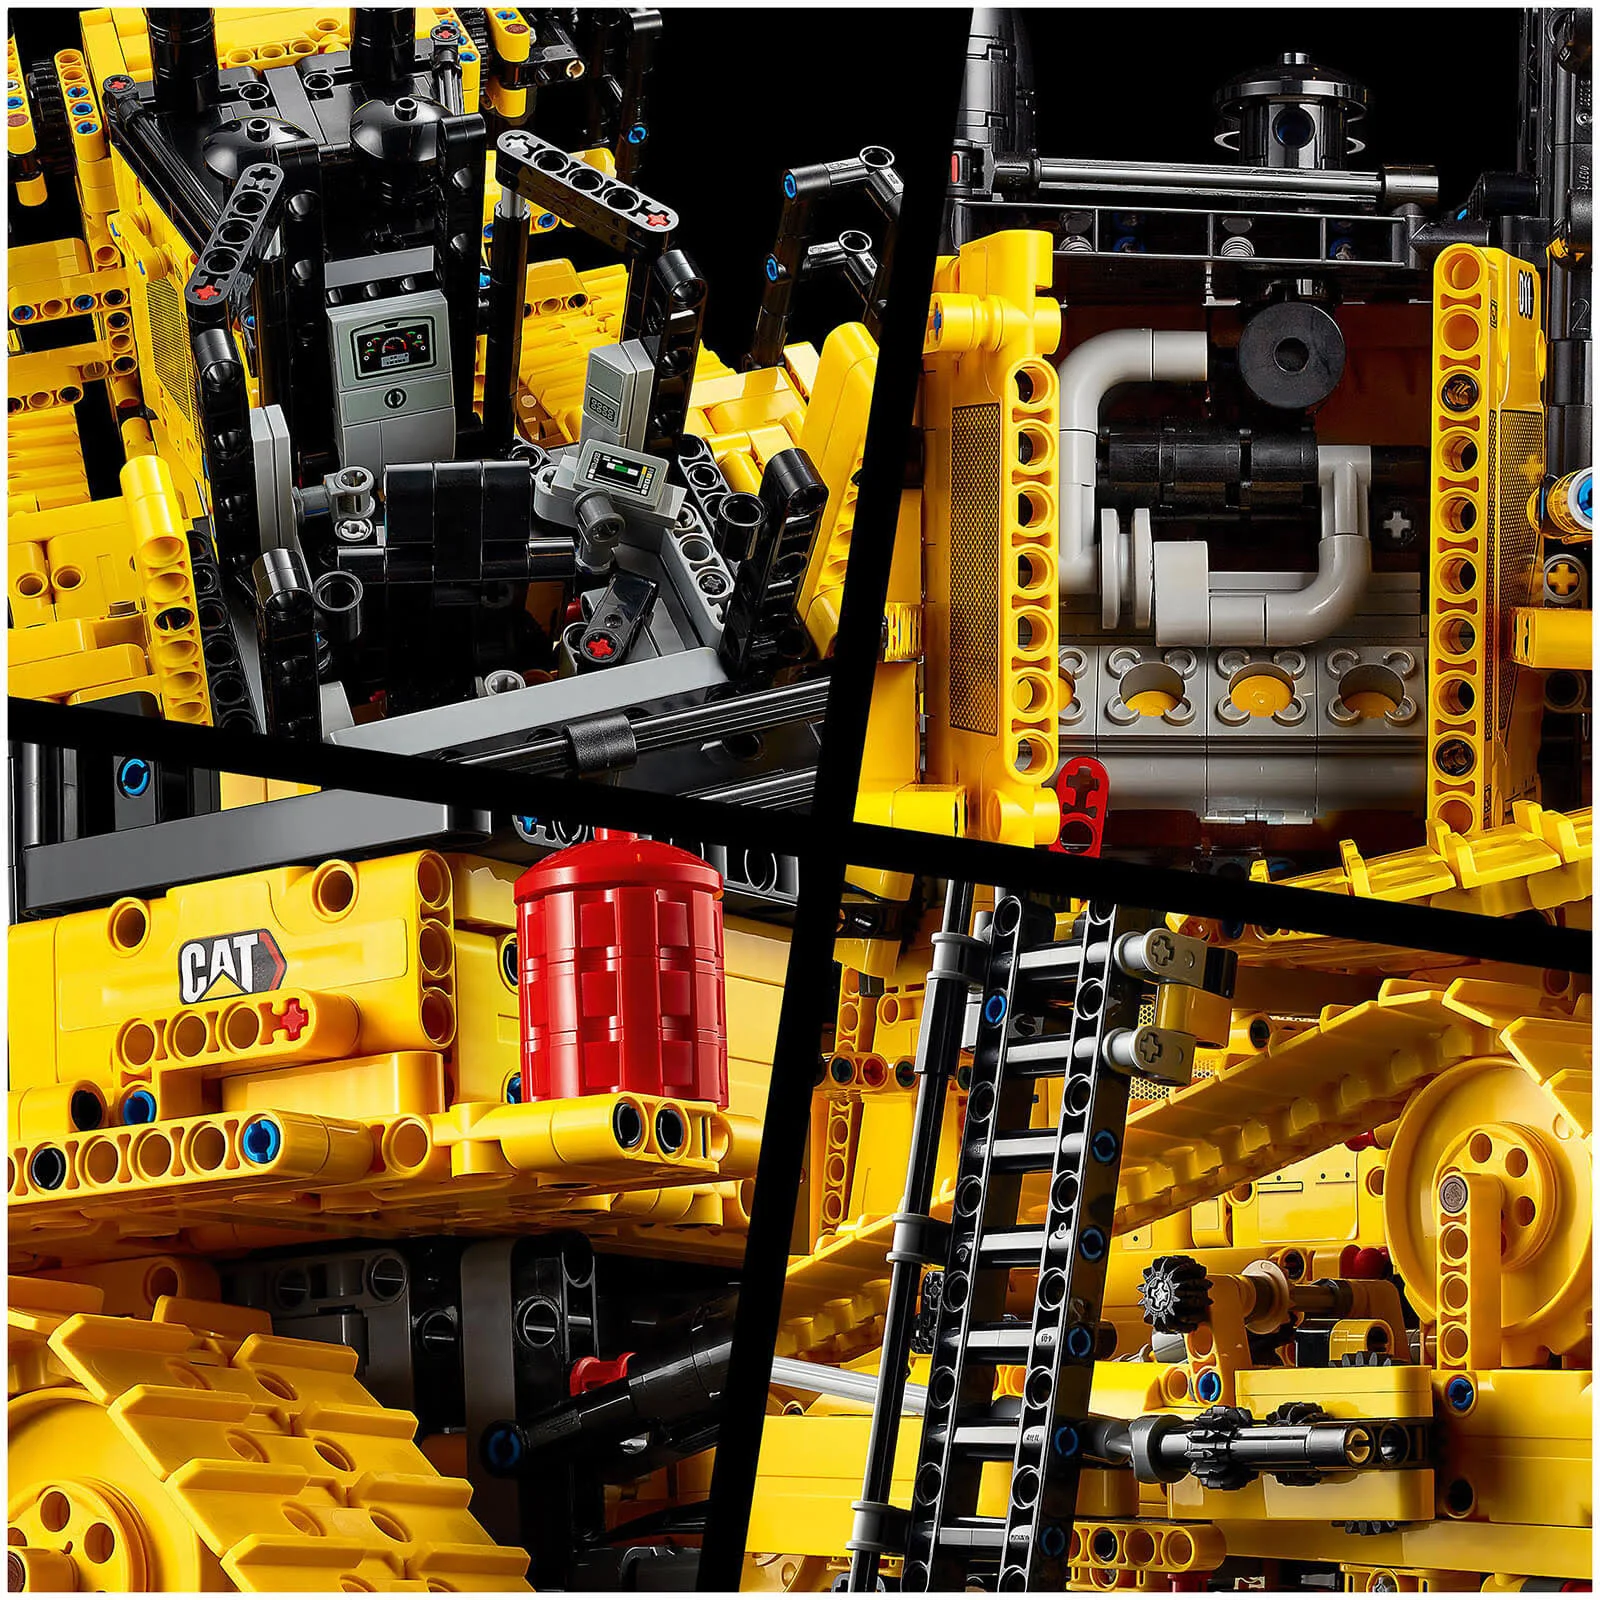 Lego Technic: App-Controlled Cat D11 Bulldozer Set (42131)